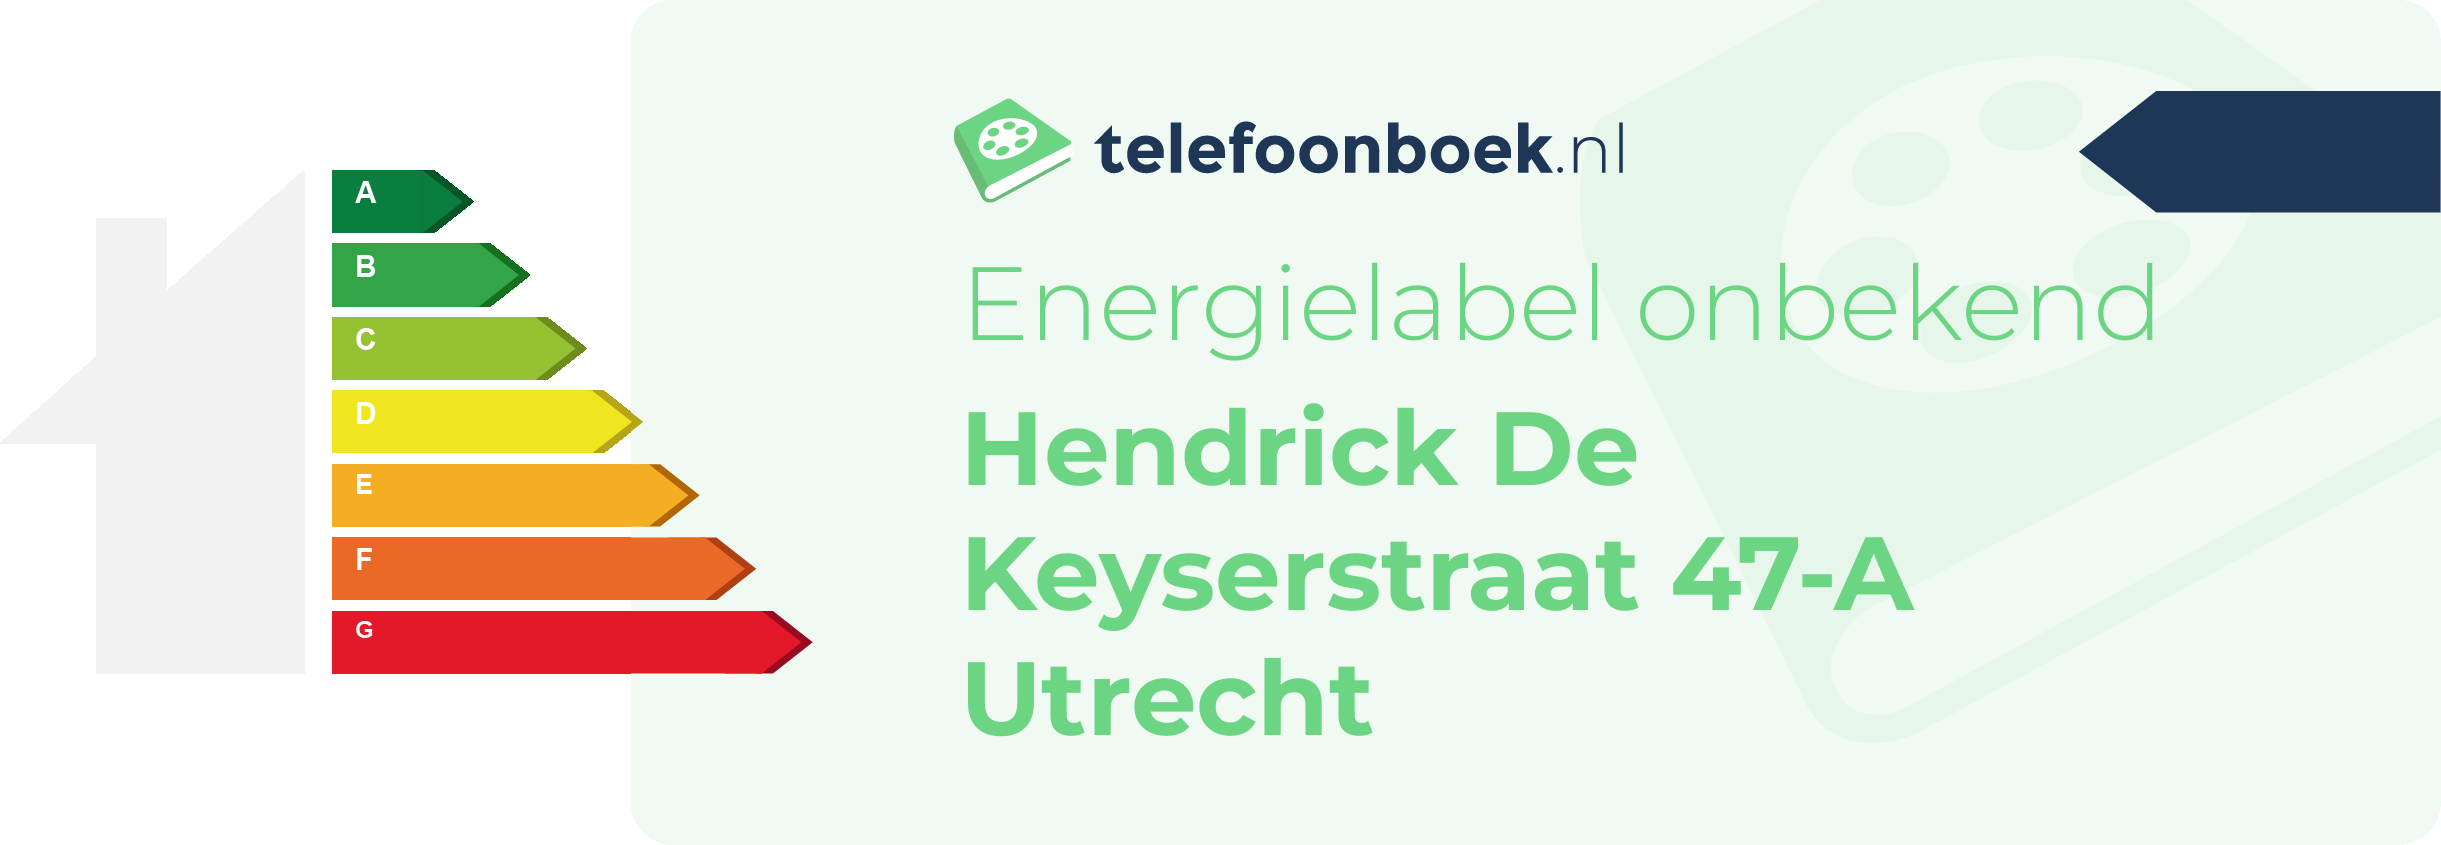 Energielabel Hendrick De Keyserstraat 47-A Utrecht